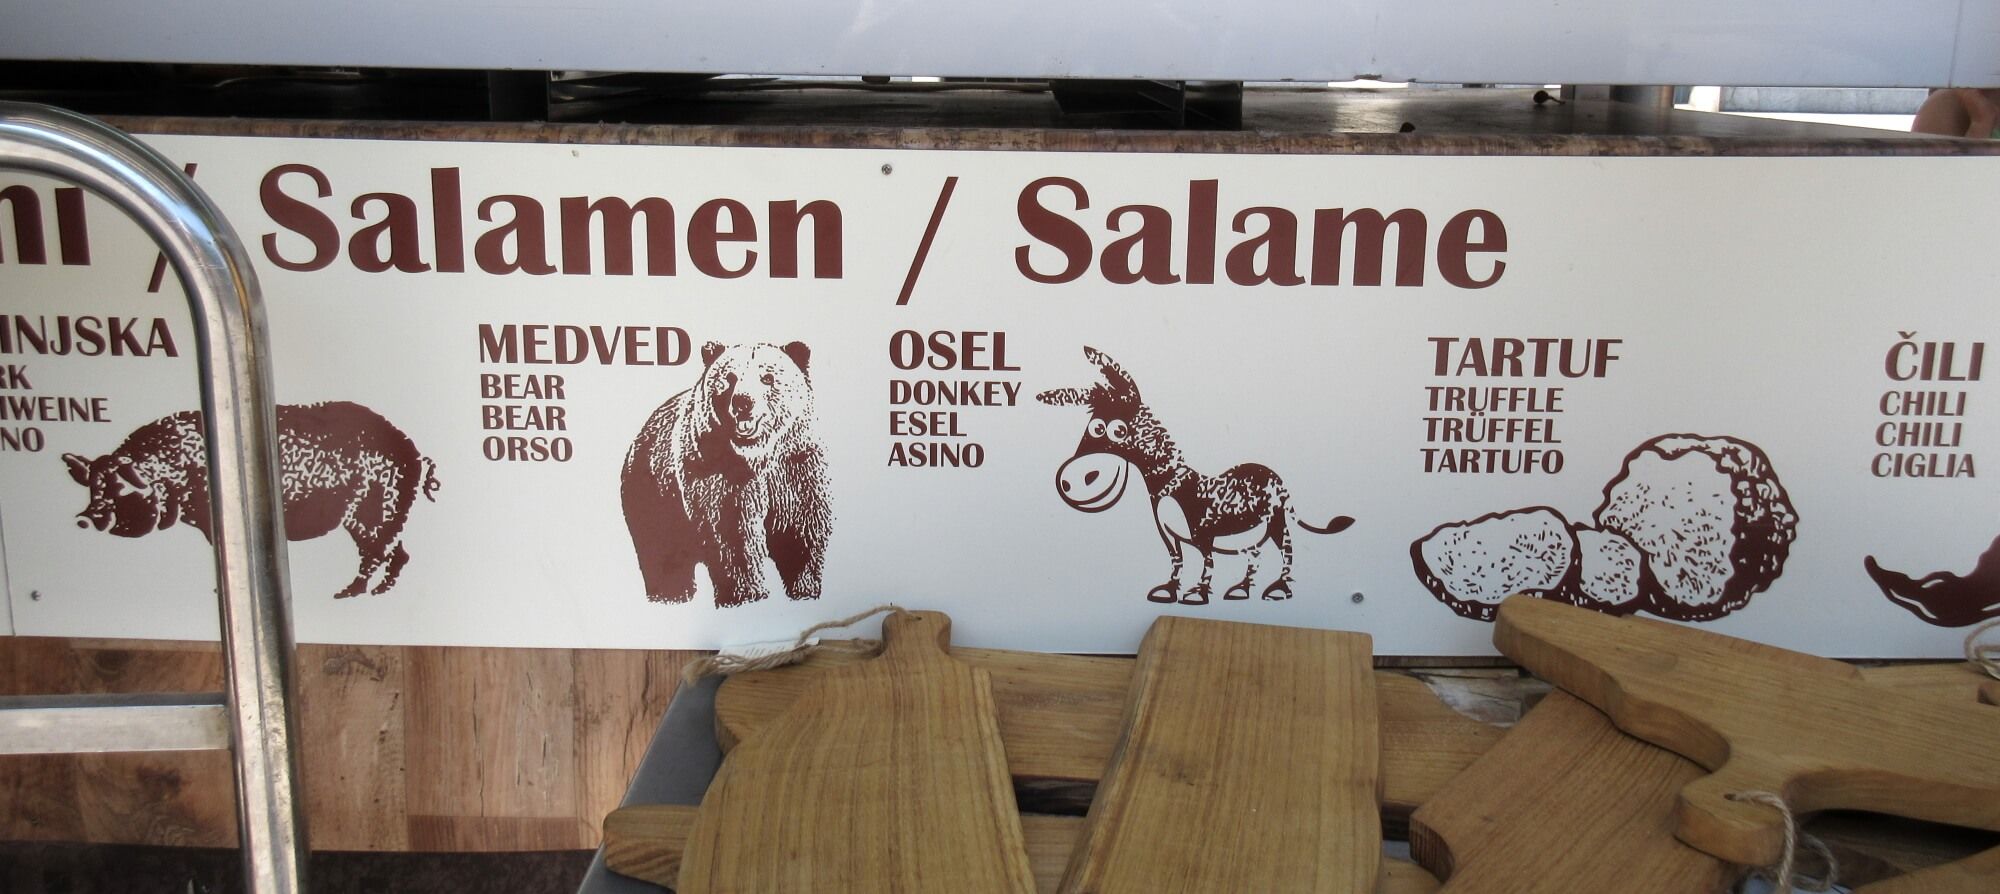 jl flanner august 2019 ljubljana market salami bear donkey.jpg